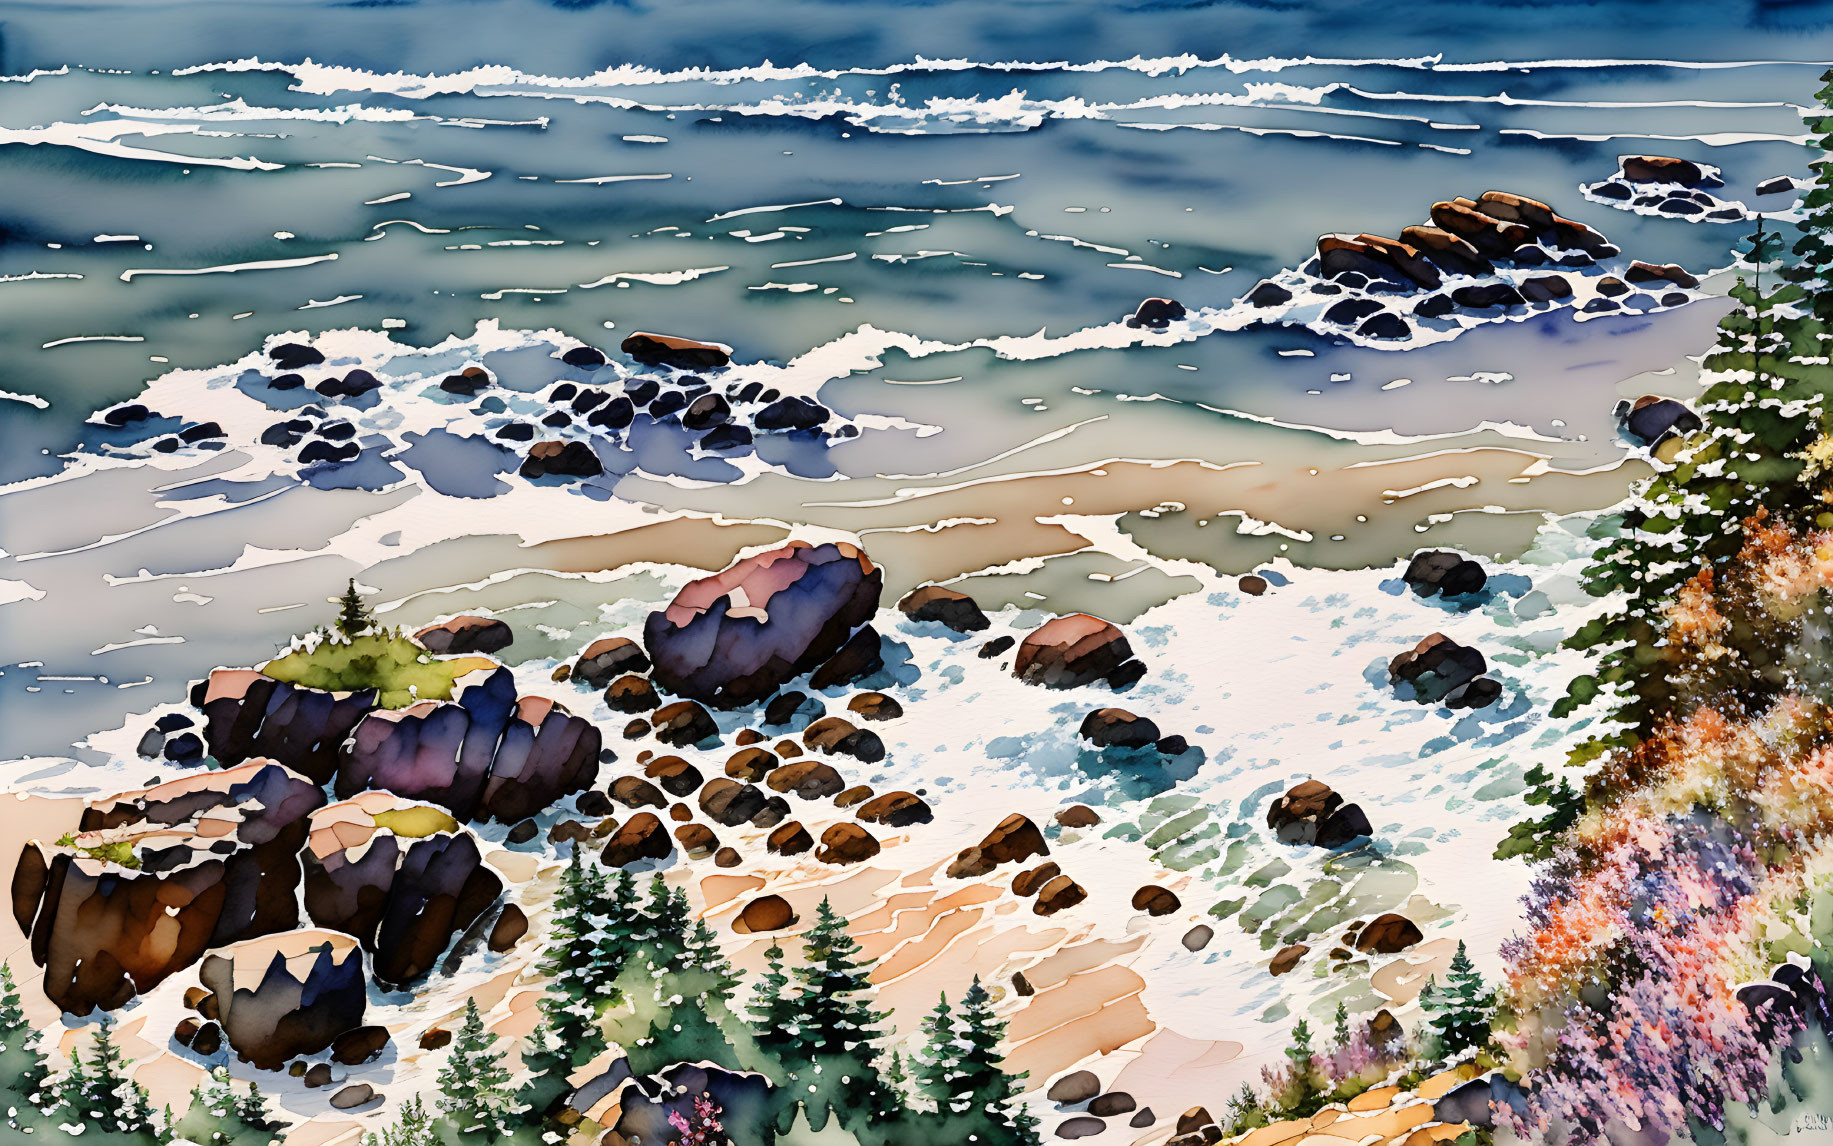 Rugged coastline watercolor painting with crashing waves, sandy beach, rocks, and greenery